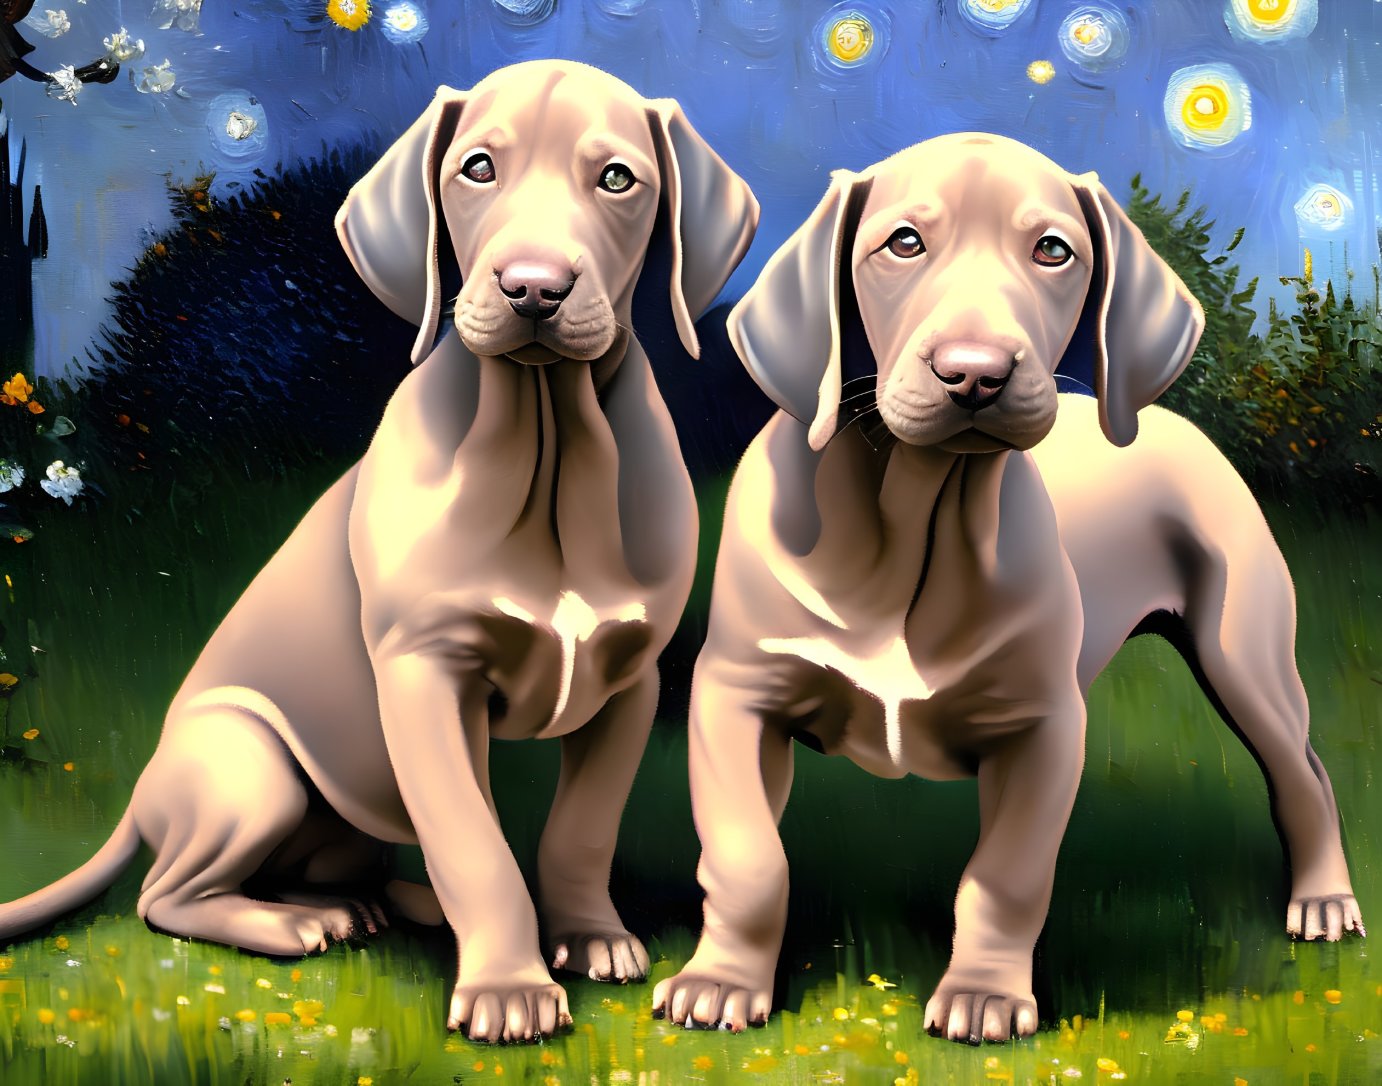 Grey Weimaraner puppies with blue eyes on grass under starry night sky.